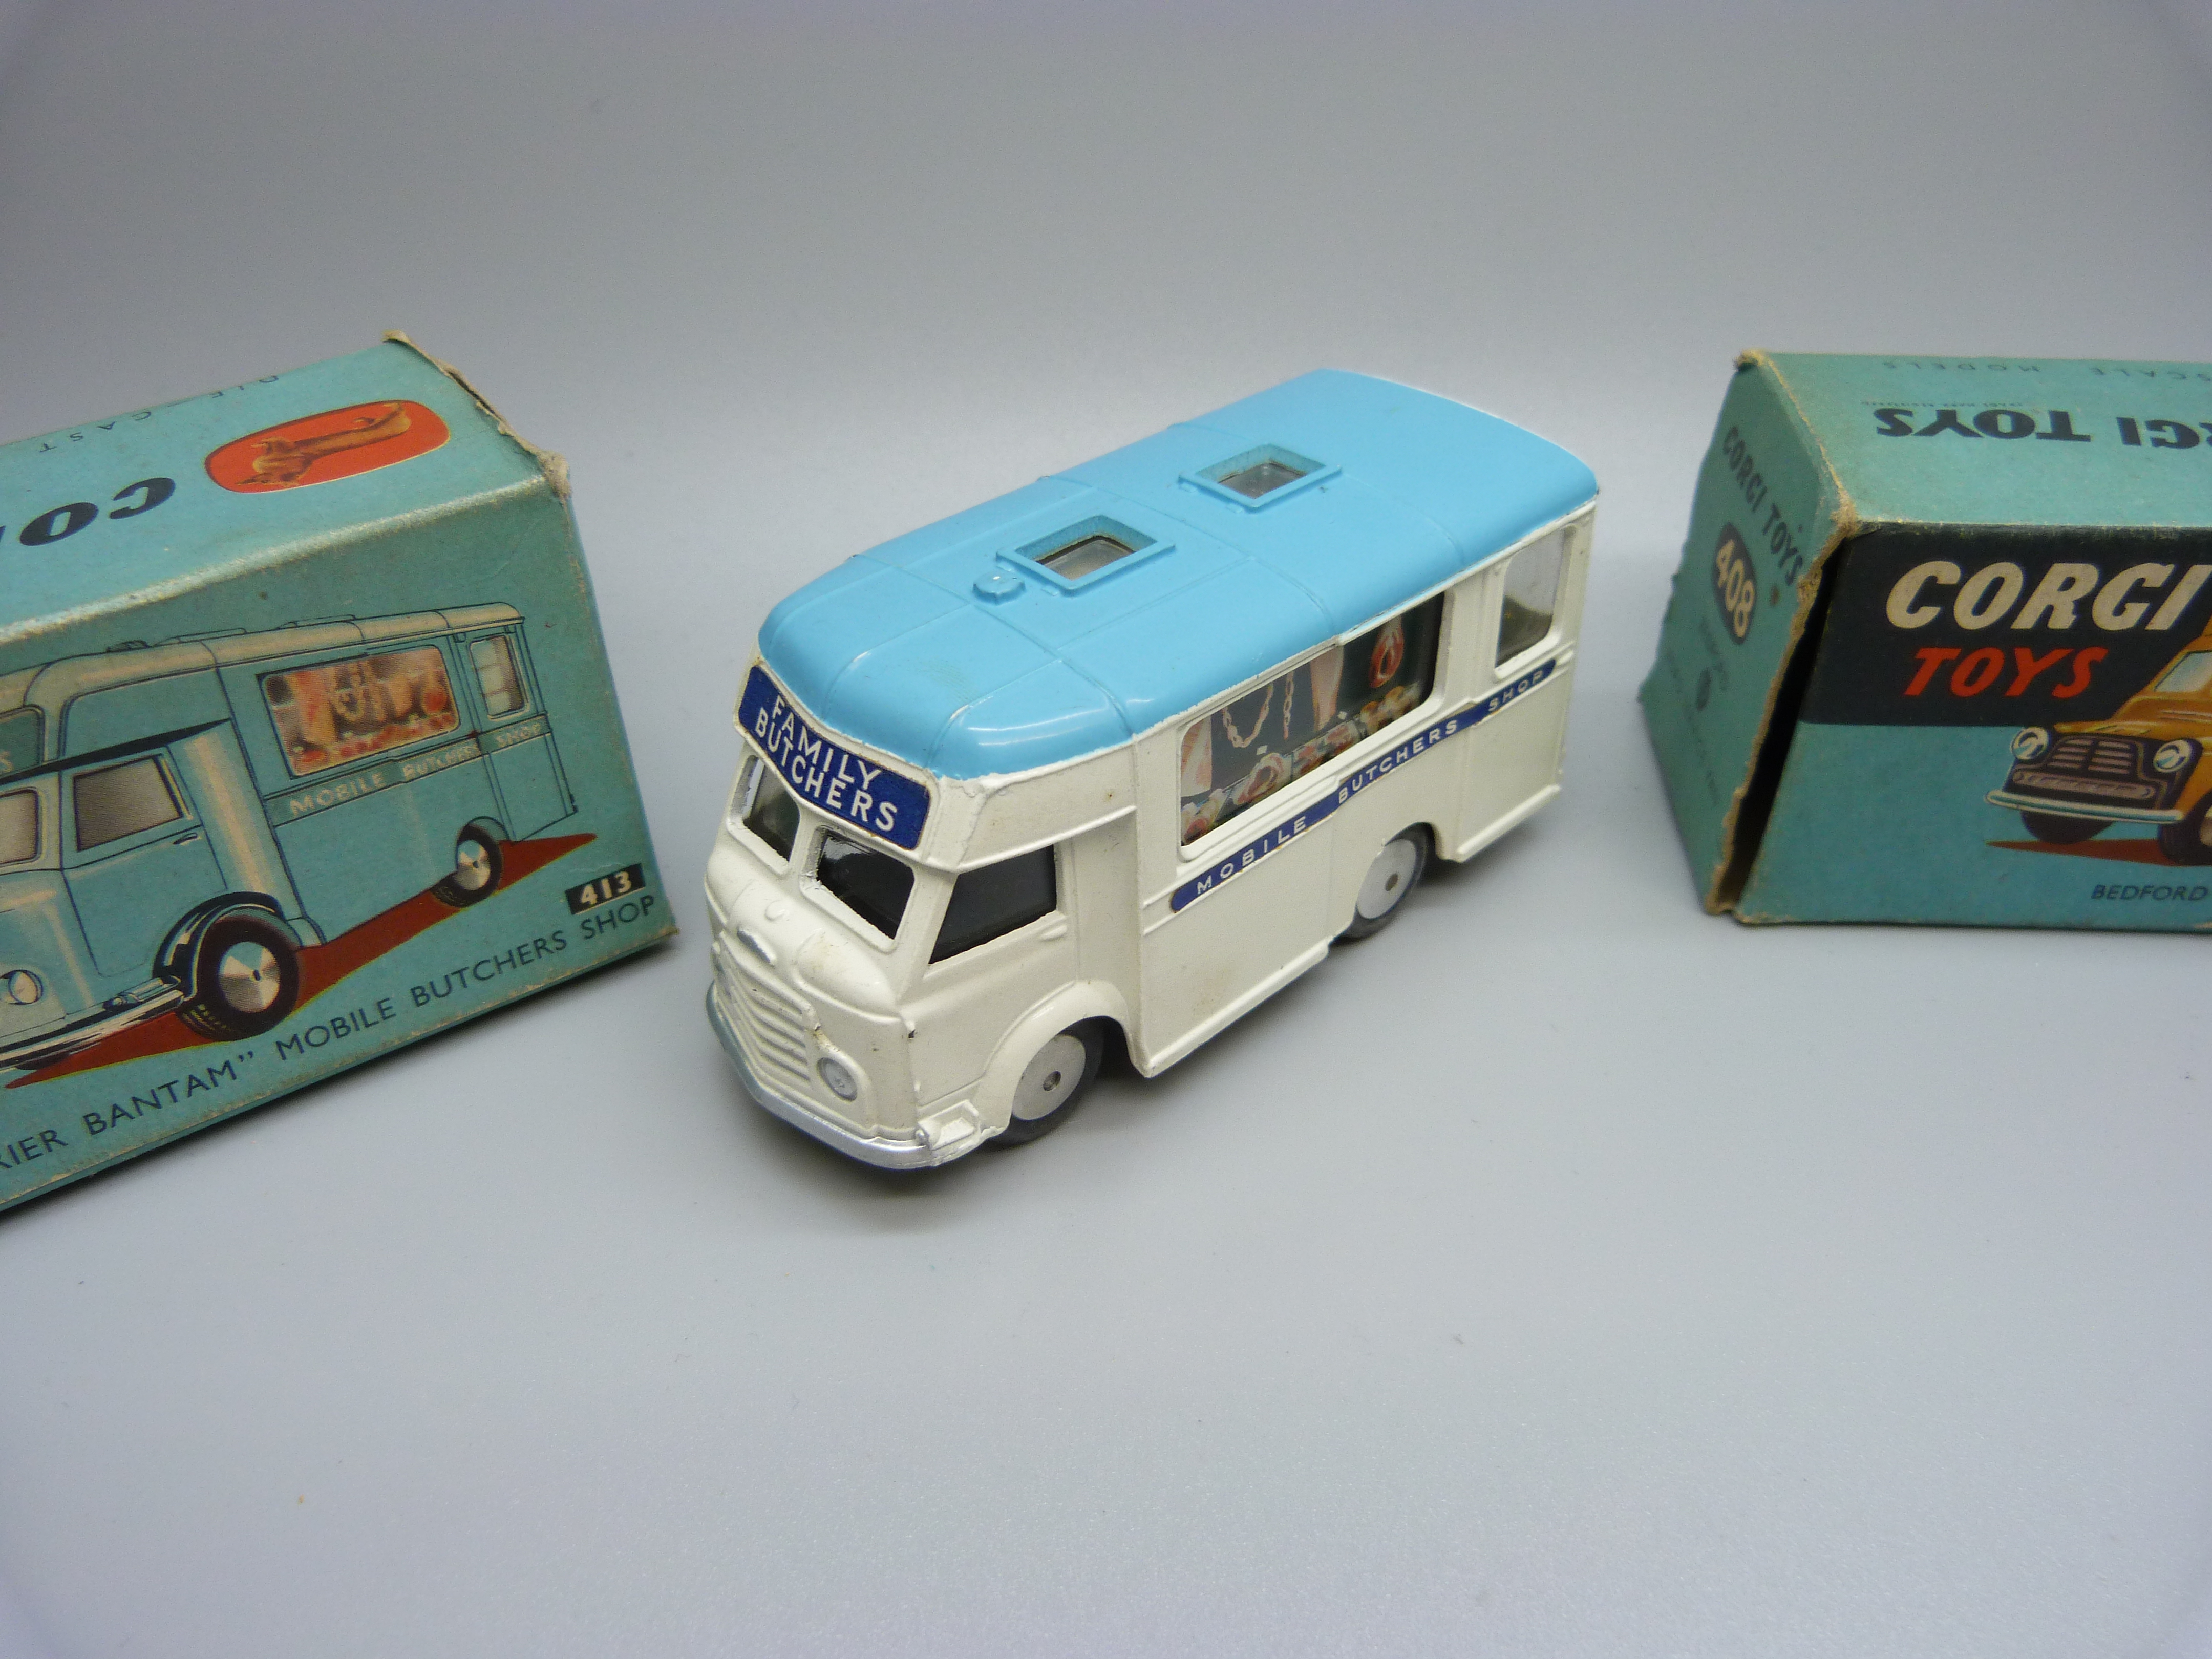 Two Corgi Toys, 408 Bedford Road Service Van and 413 Smith's Karrier Bantam Mobile Butchers Shop, - Image 2 of 7